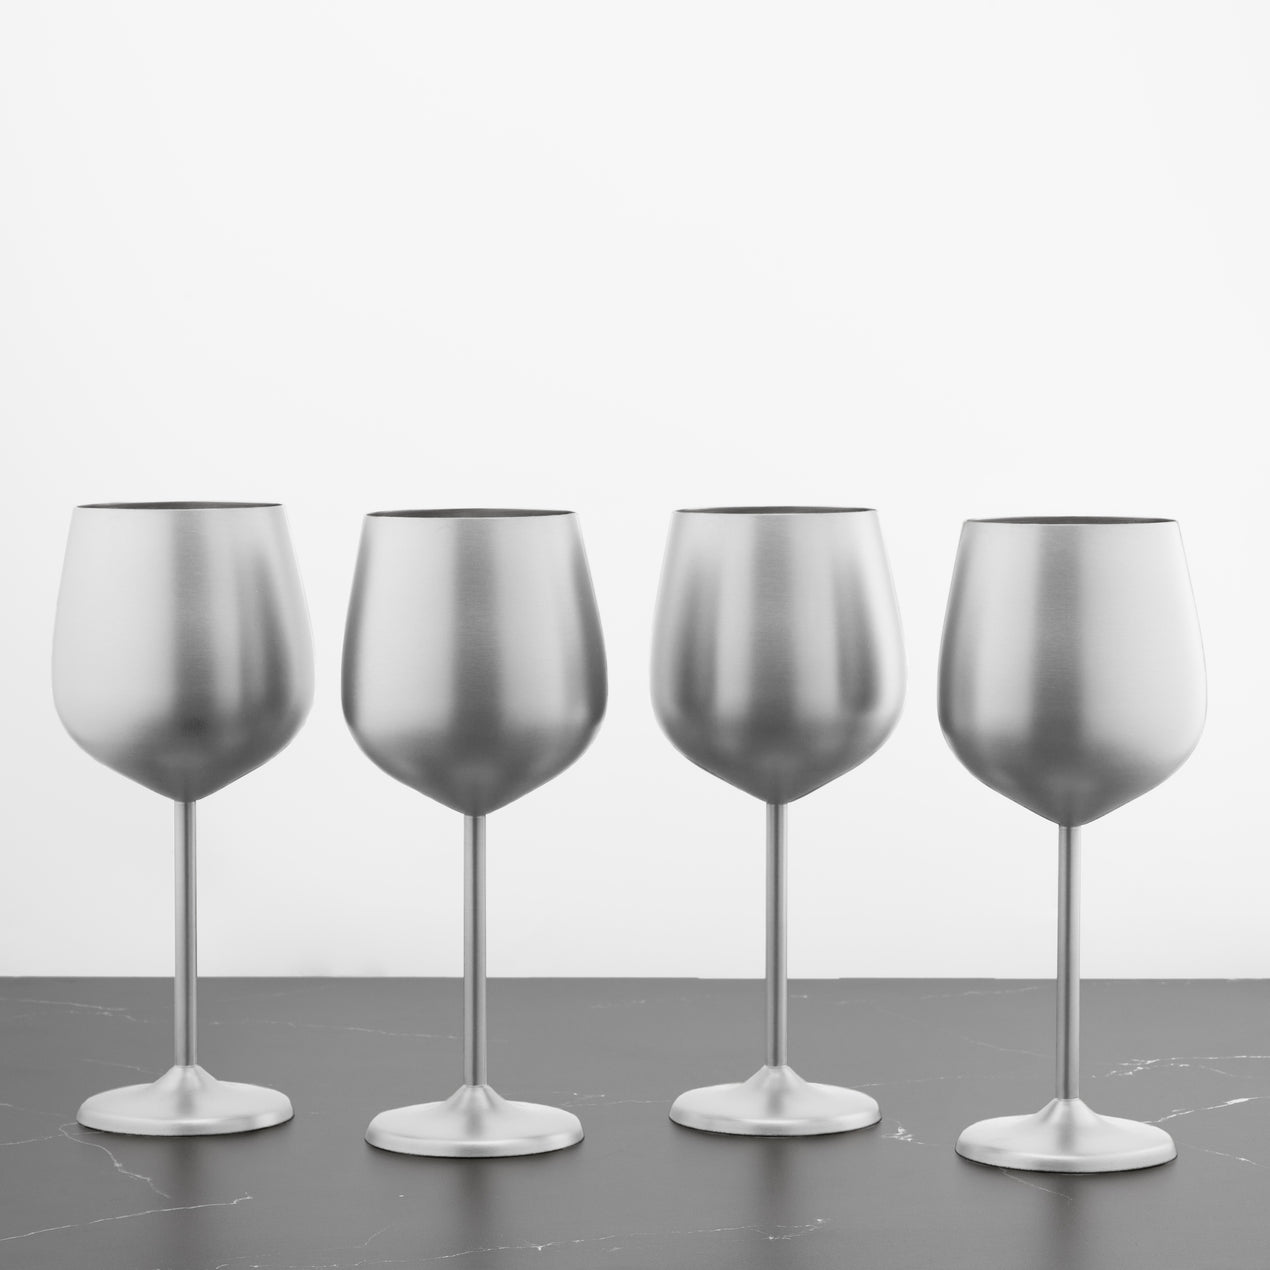 18 Oz Stainless Steel Wine Glasses, Set of 4 – Cambridge Silversmiths®